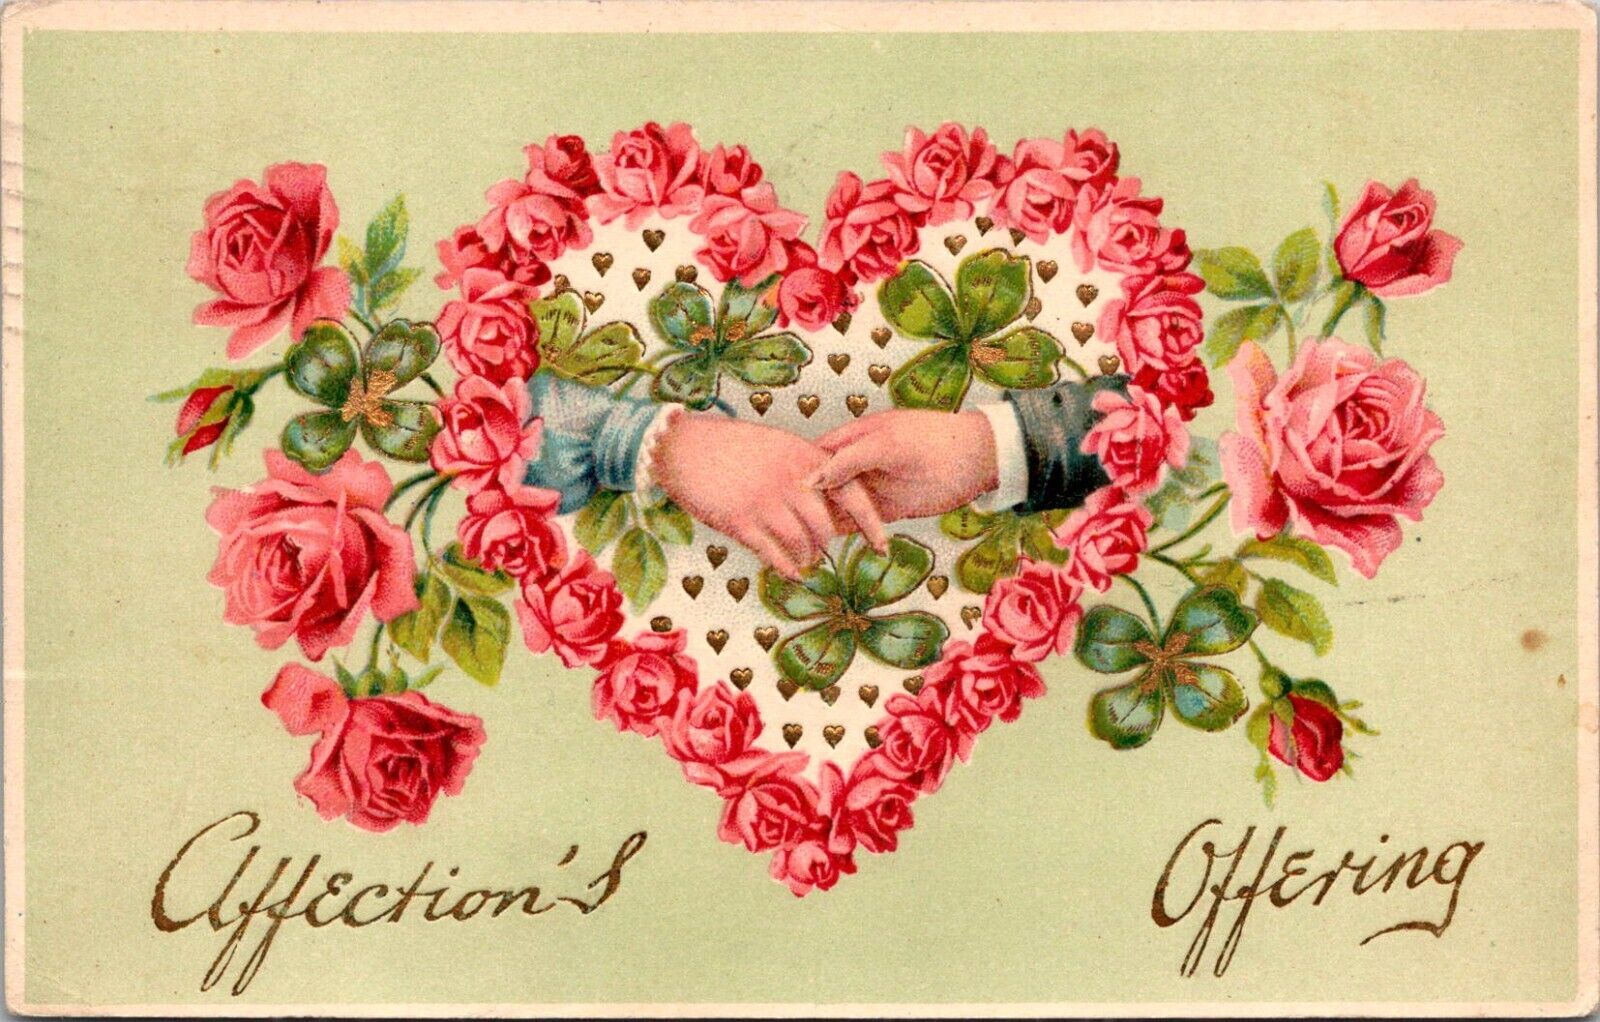 Affections Offering Love Heart Roses Shamrocks Rapheal Tuck c1900s 1908 Postcard